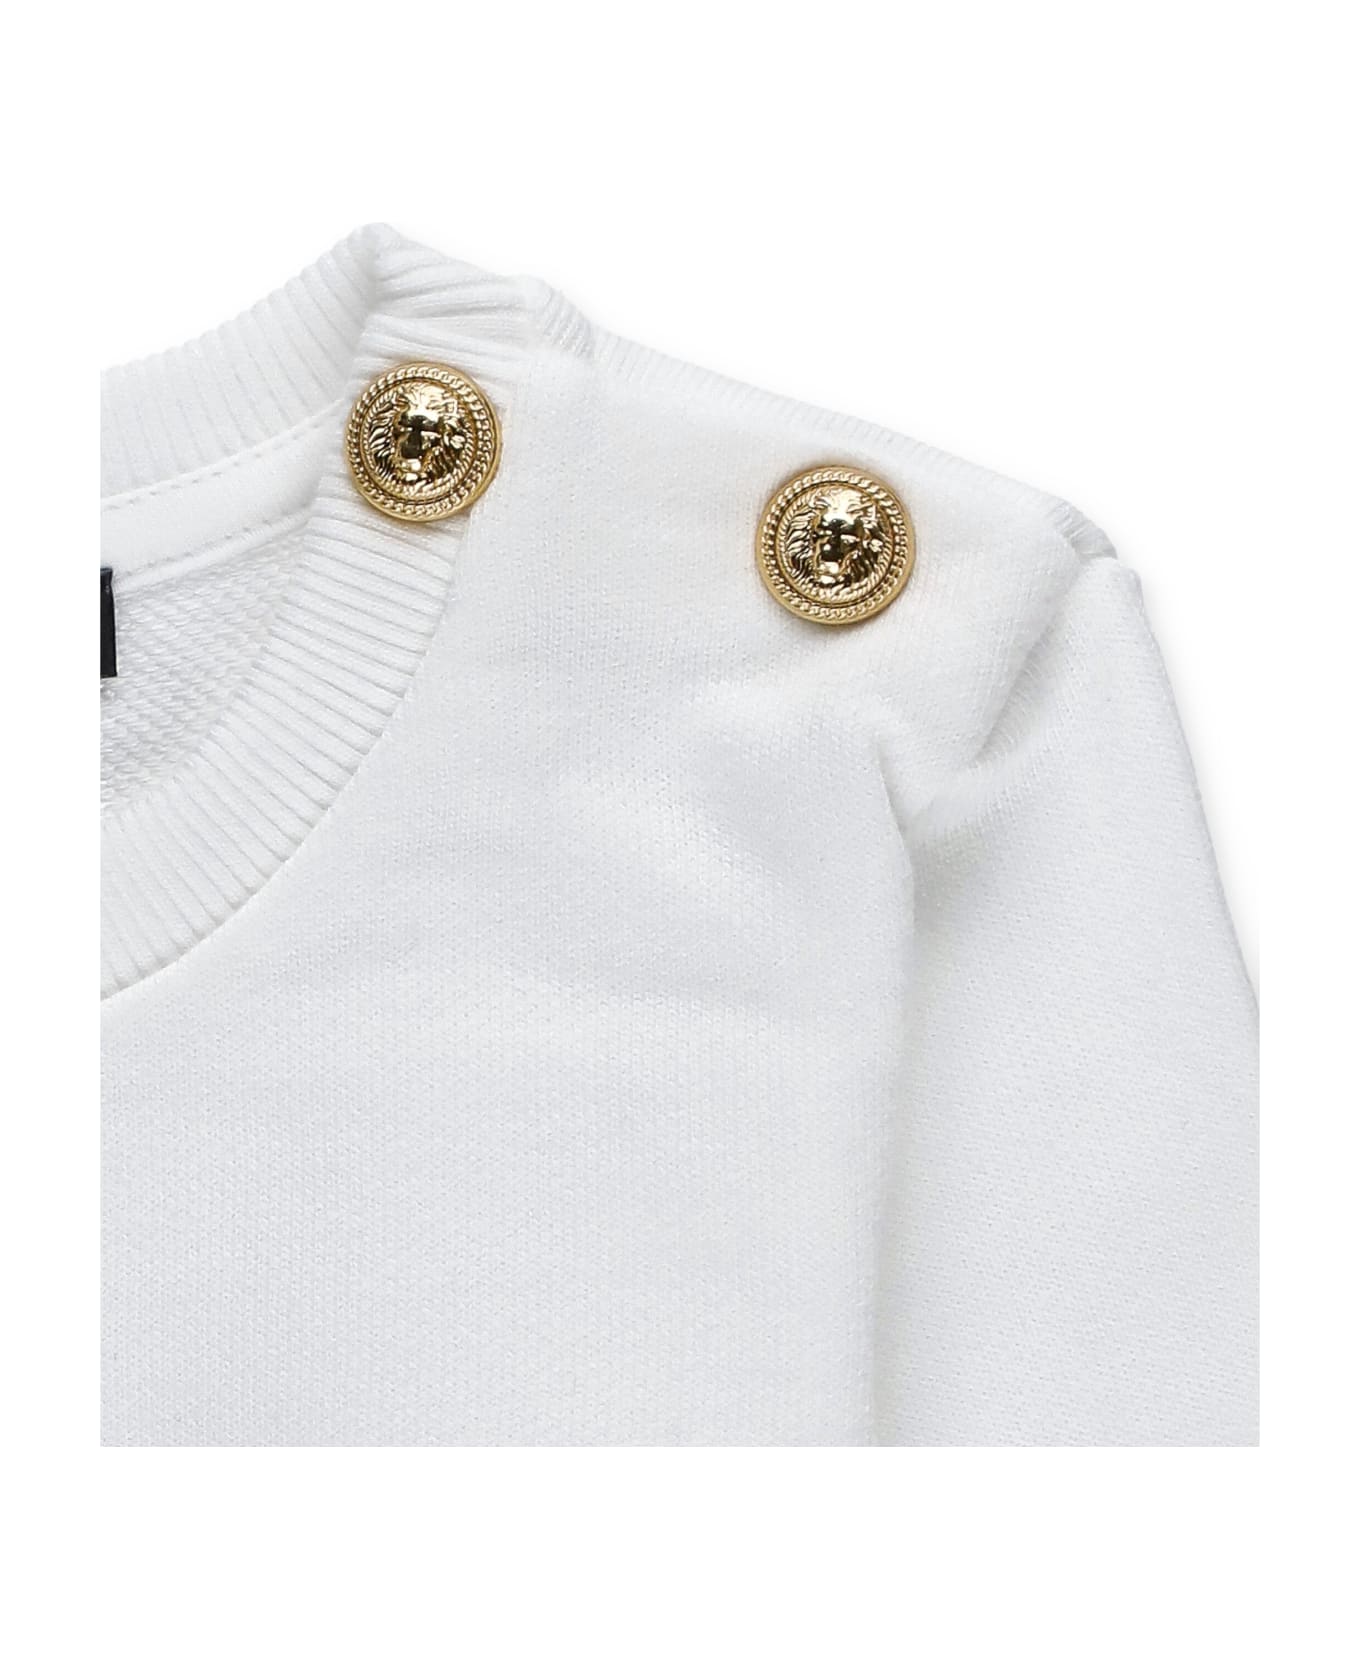 Balmain Logoed Sweater - White